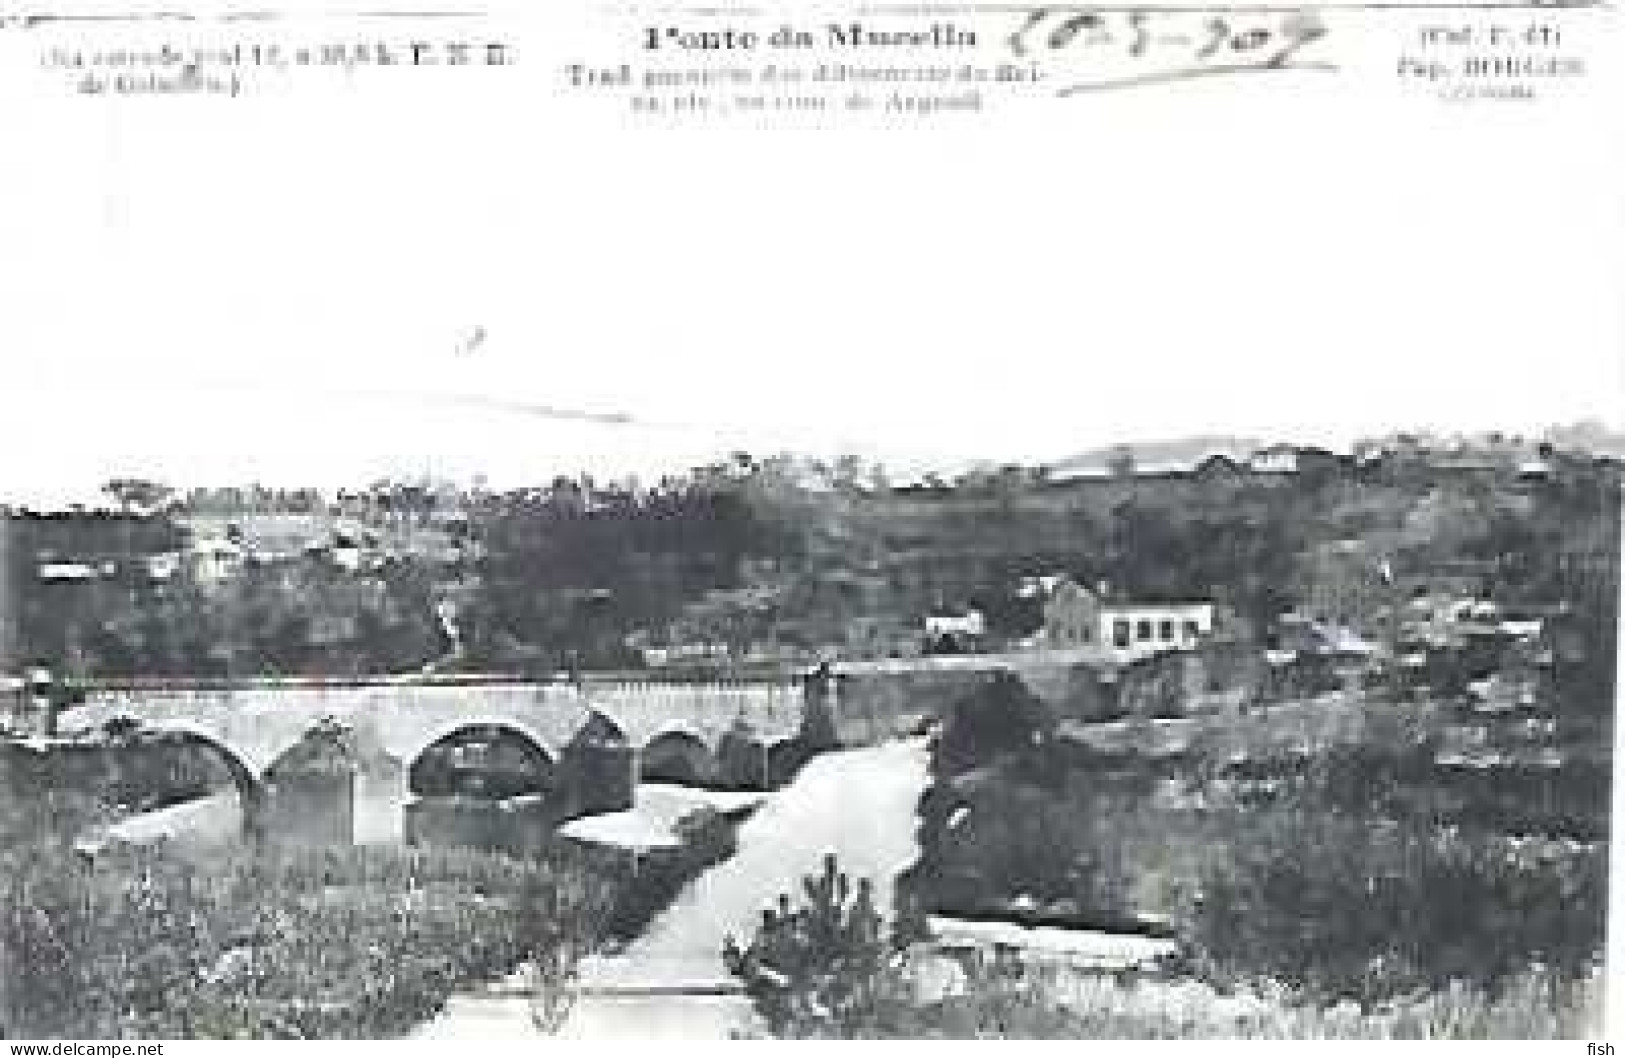 Portugal & Marcofilia, Arganil, Mucella Bridge, Estrada Real 12 A 38.8Km De Coimbra, Poiares A Manteigas 1909 (13 - Bruggen